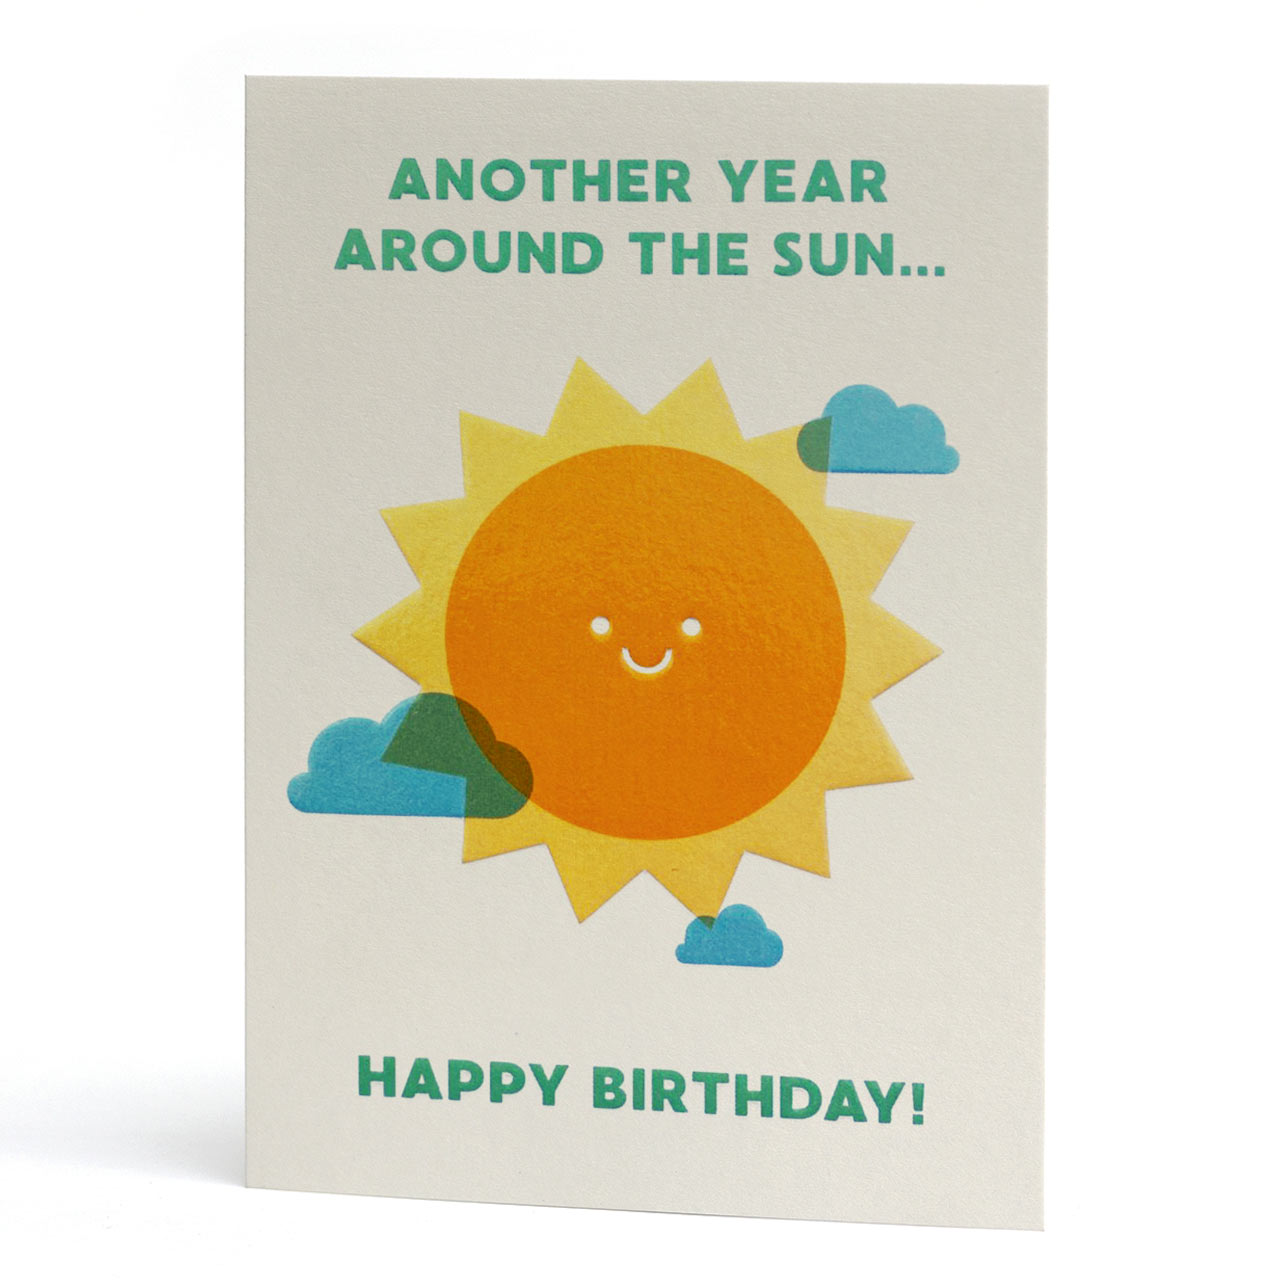 Around the Sun Greeting Card